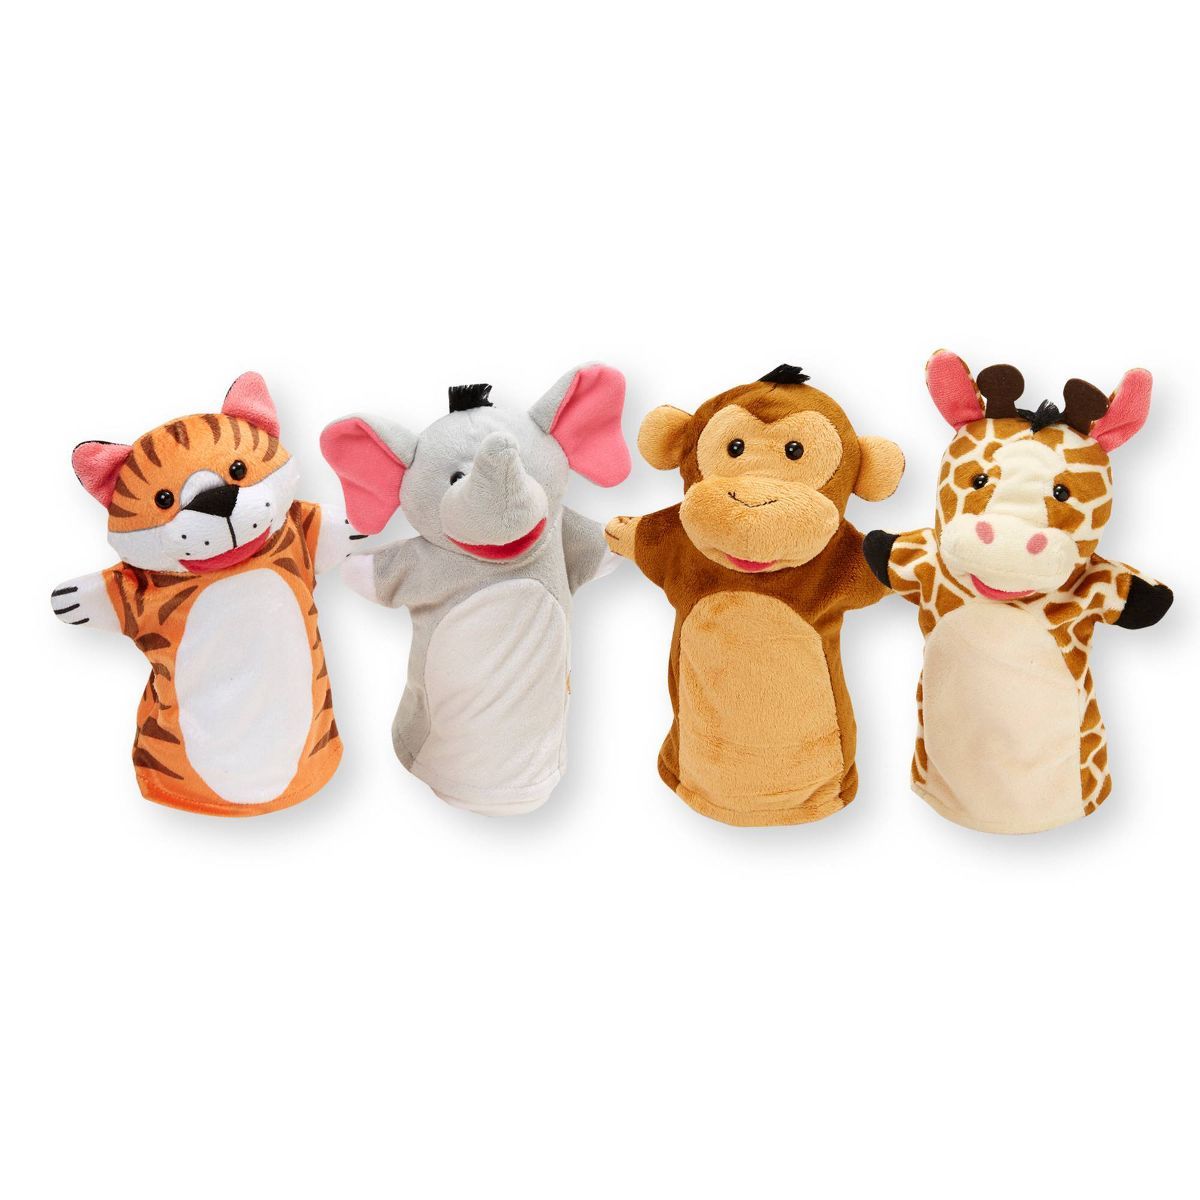 Melissa & Doug Zoo Friends Hand Puppets 4pk - Elephant, Giraffe, Tiger, and Monkey | Target